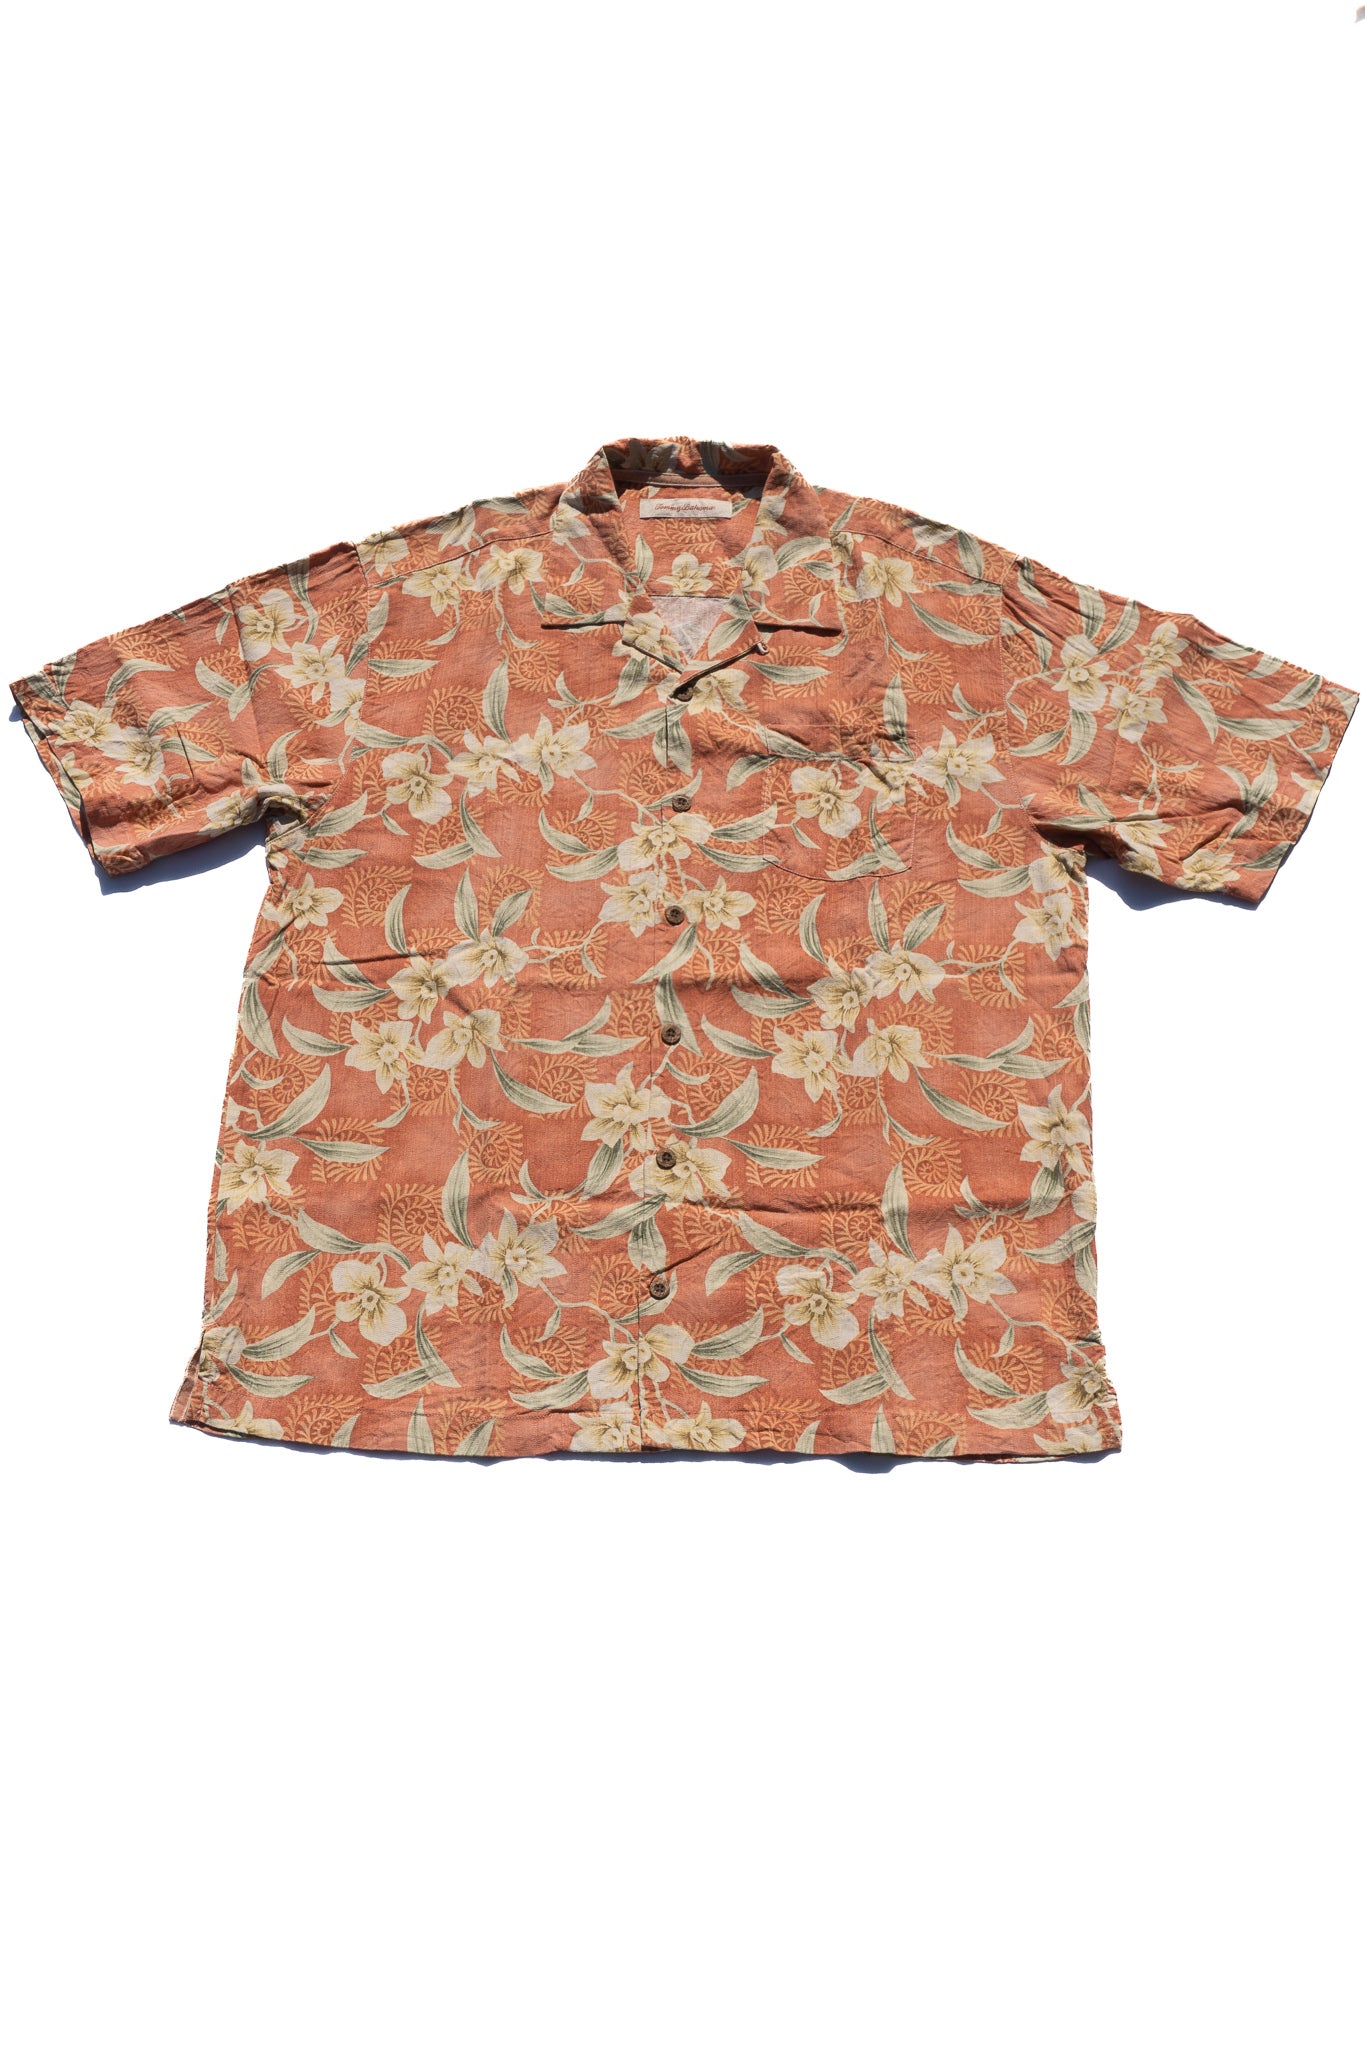 "Tommy Bahama" Flower Pattern Aloha Shirt